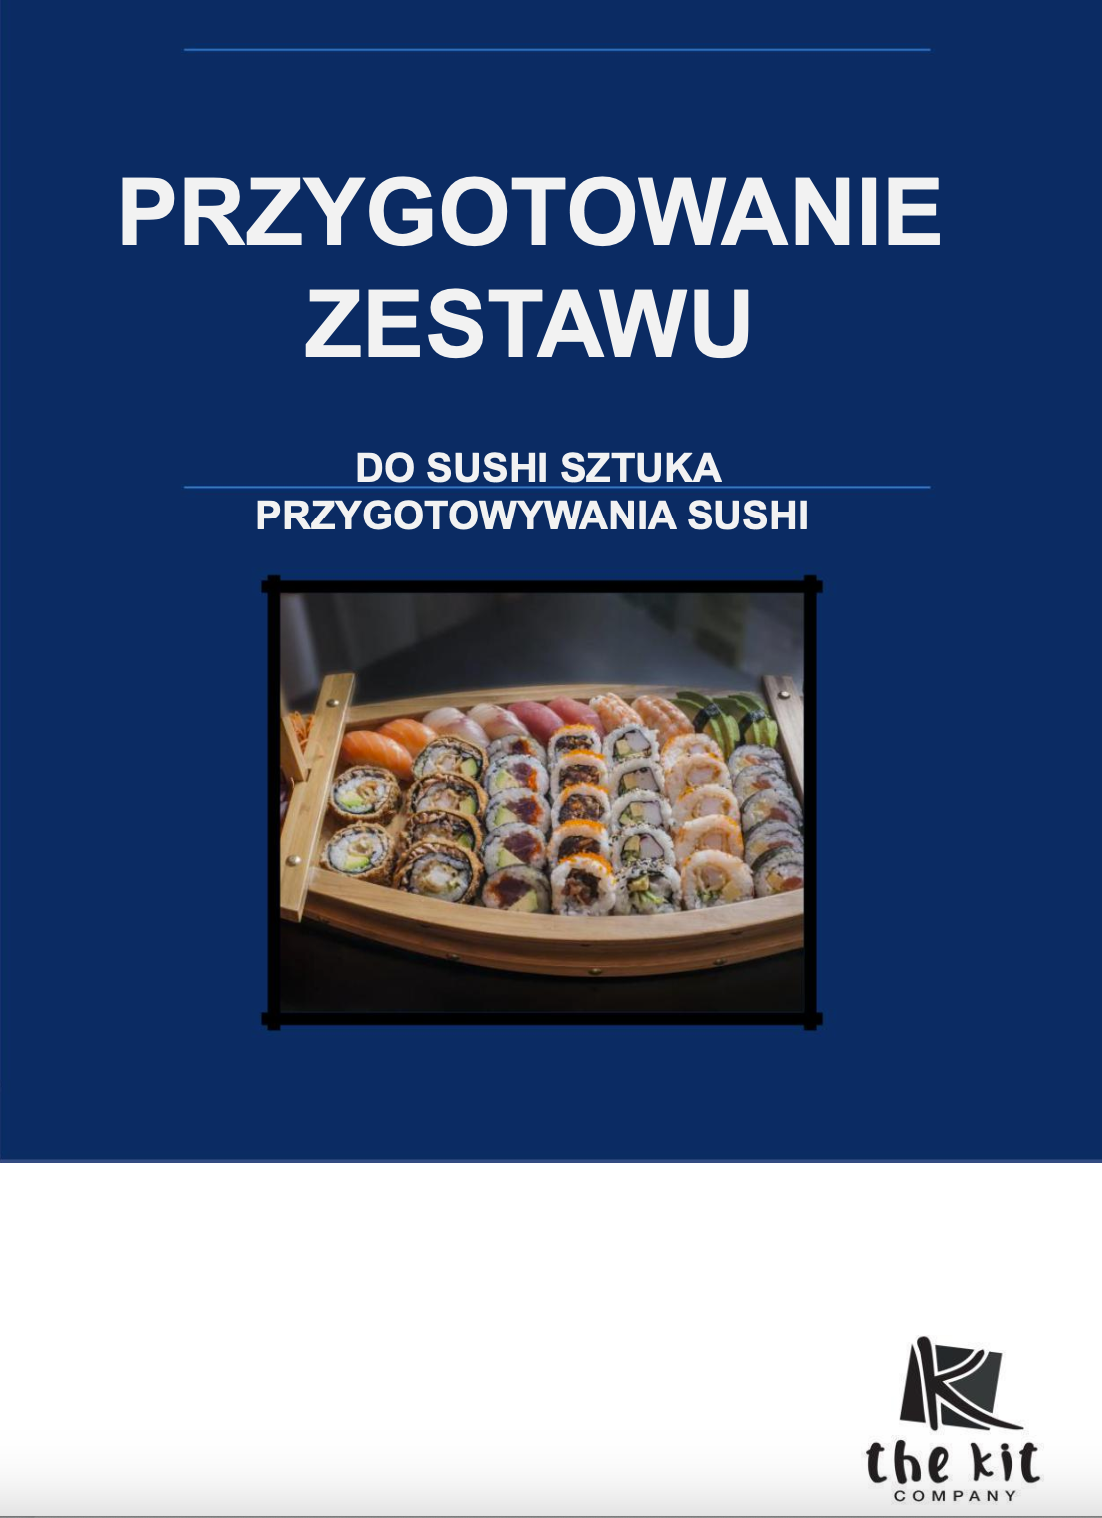 E-Book „Sushi-Zubereitungsset“ – Polnisch